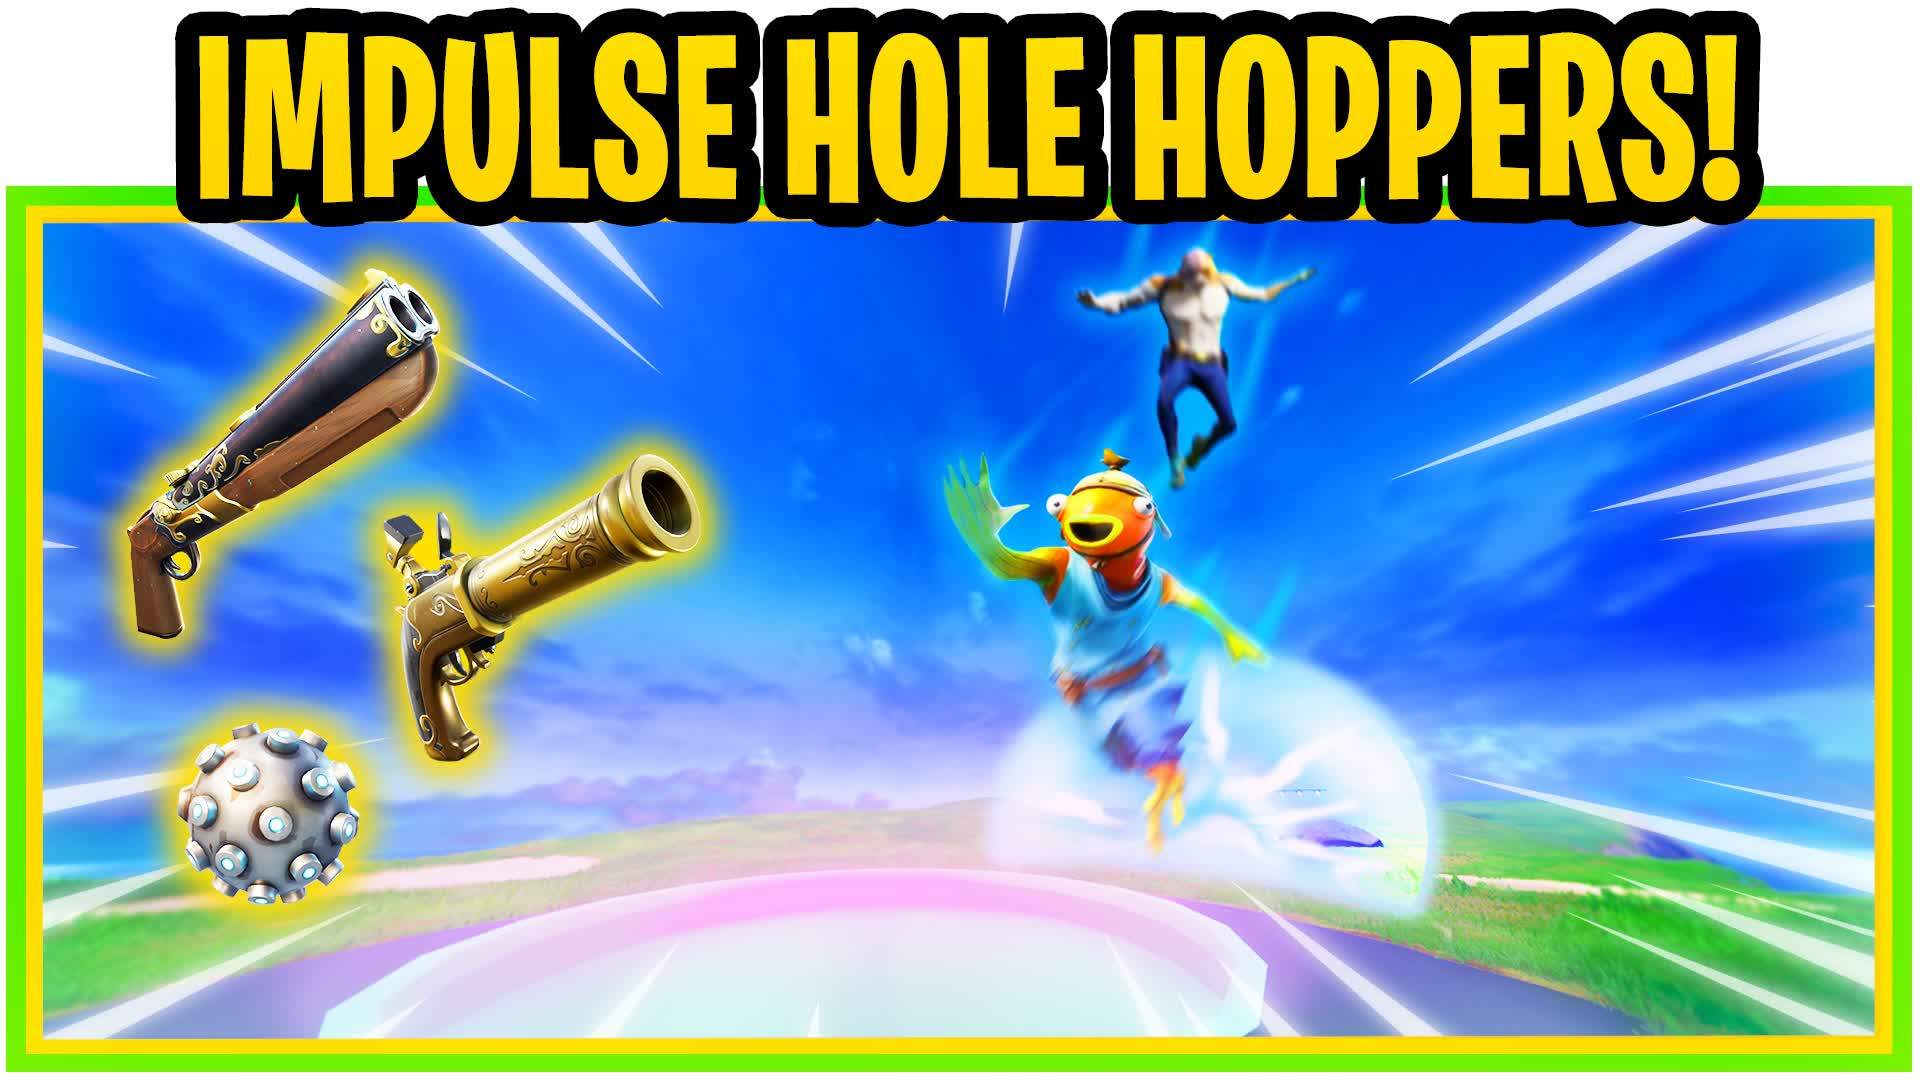 Impulse Hole Hoppers